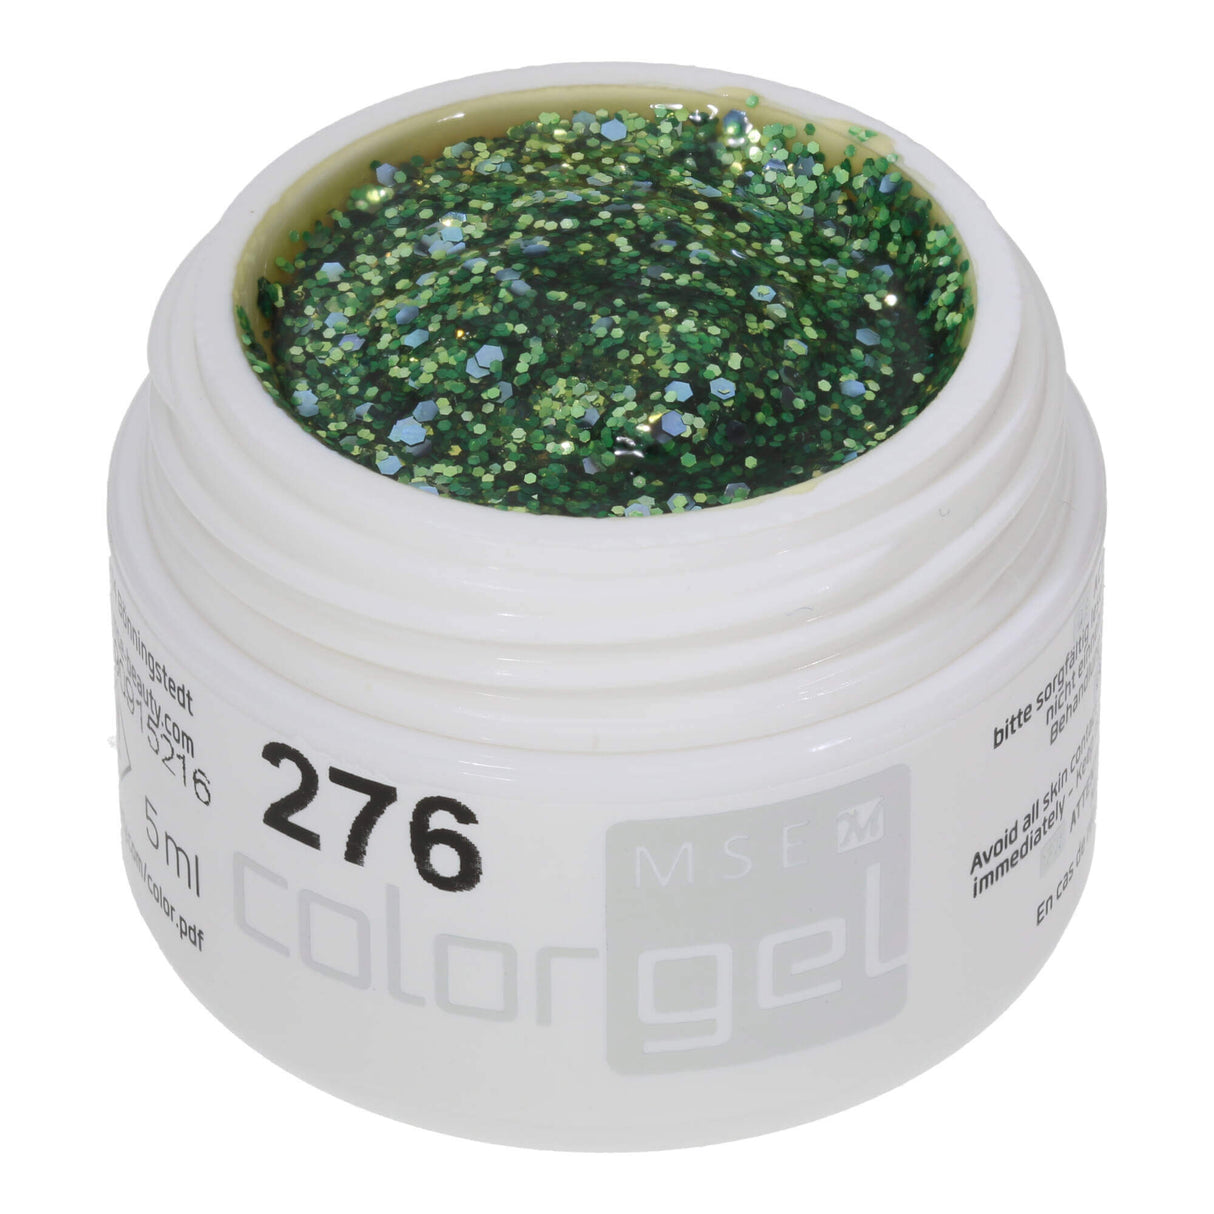 # 276 Premium GLITTER Color Gel 5ml May green glitter gel accented with coarse purple glitter